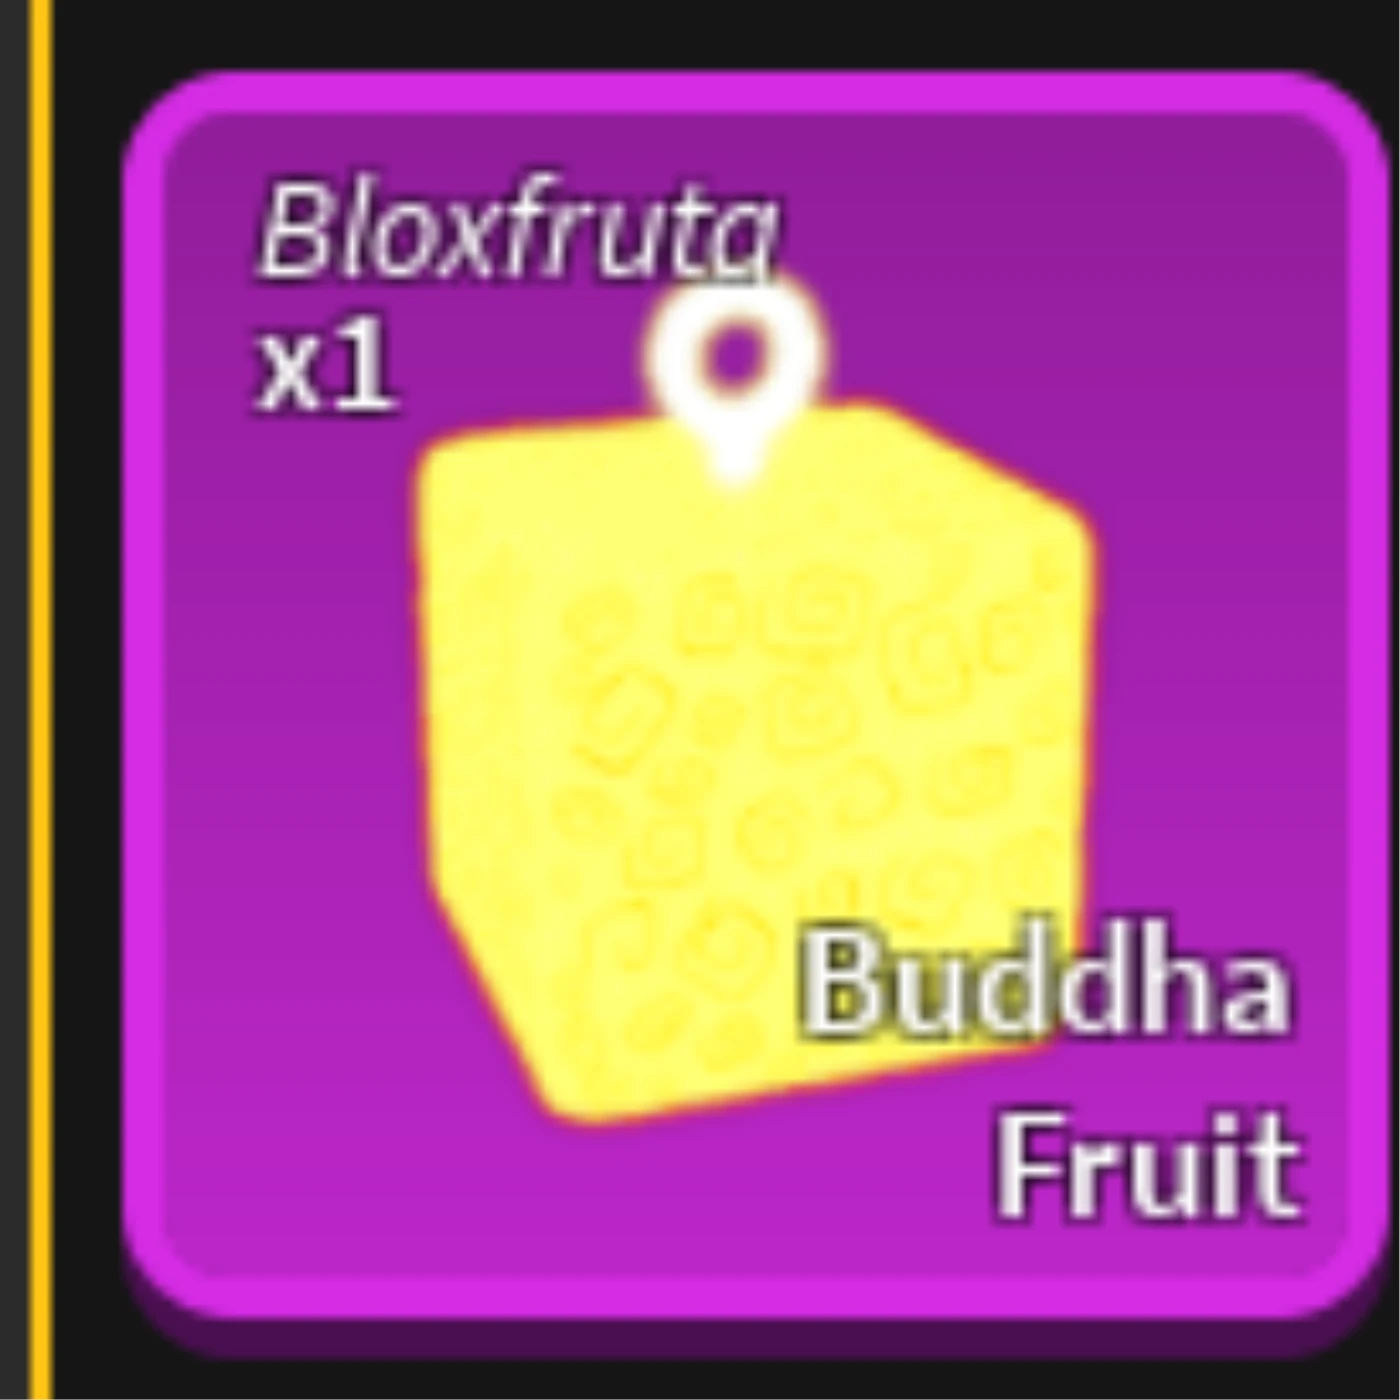 buddha blox fruit - Roblox